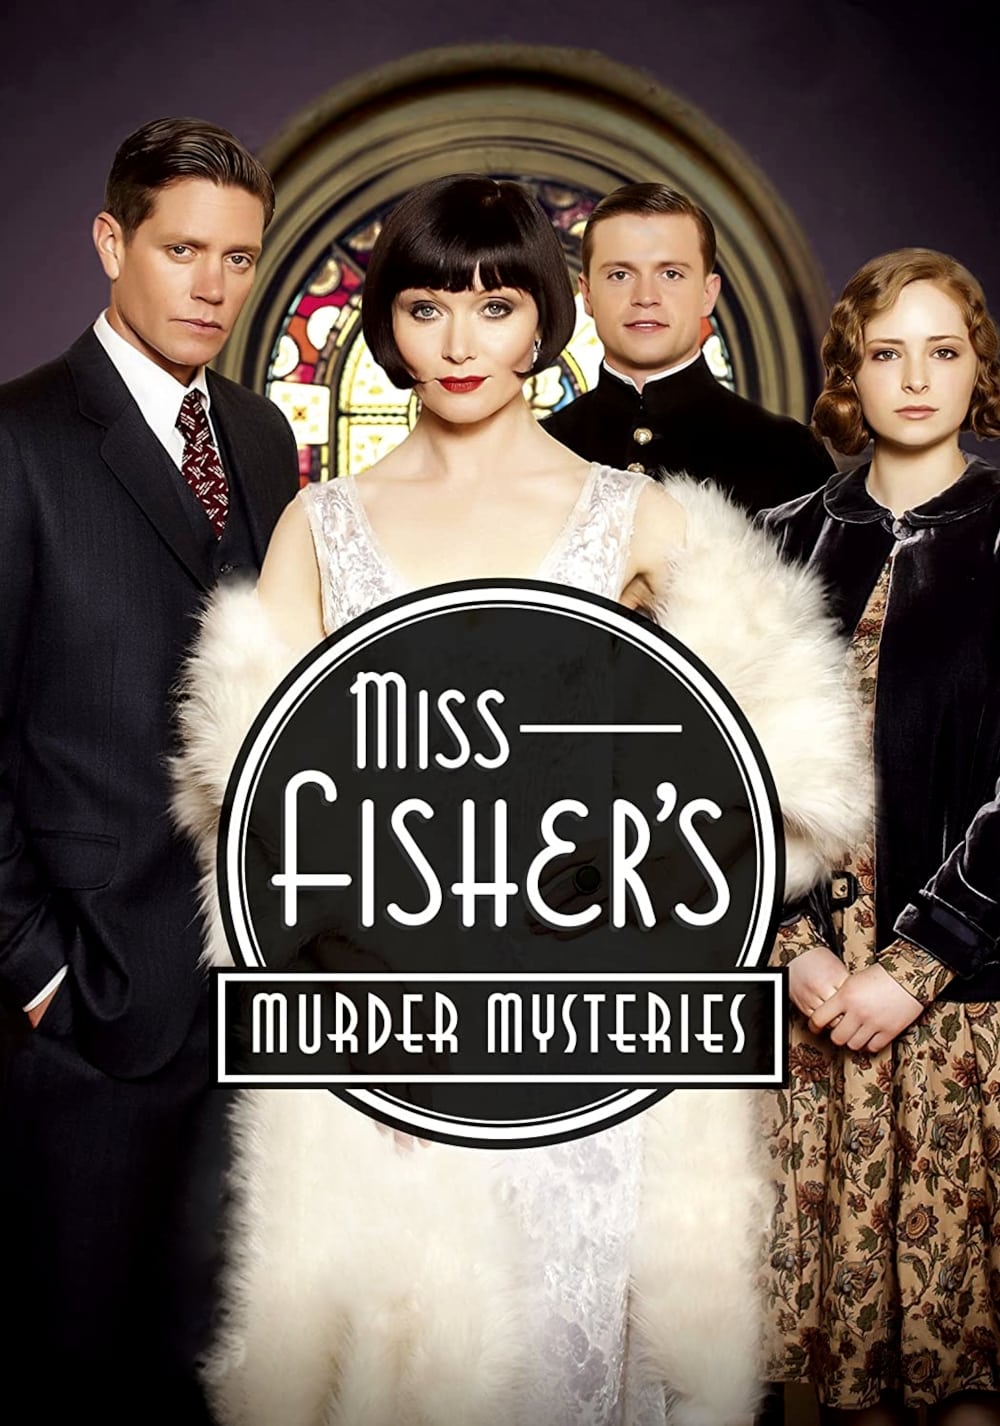 Los misteriosos asesinatos de Miss Fisher (2012)